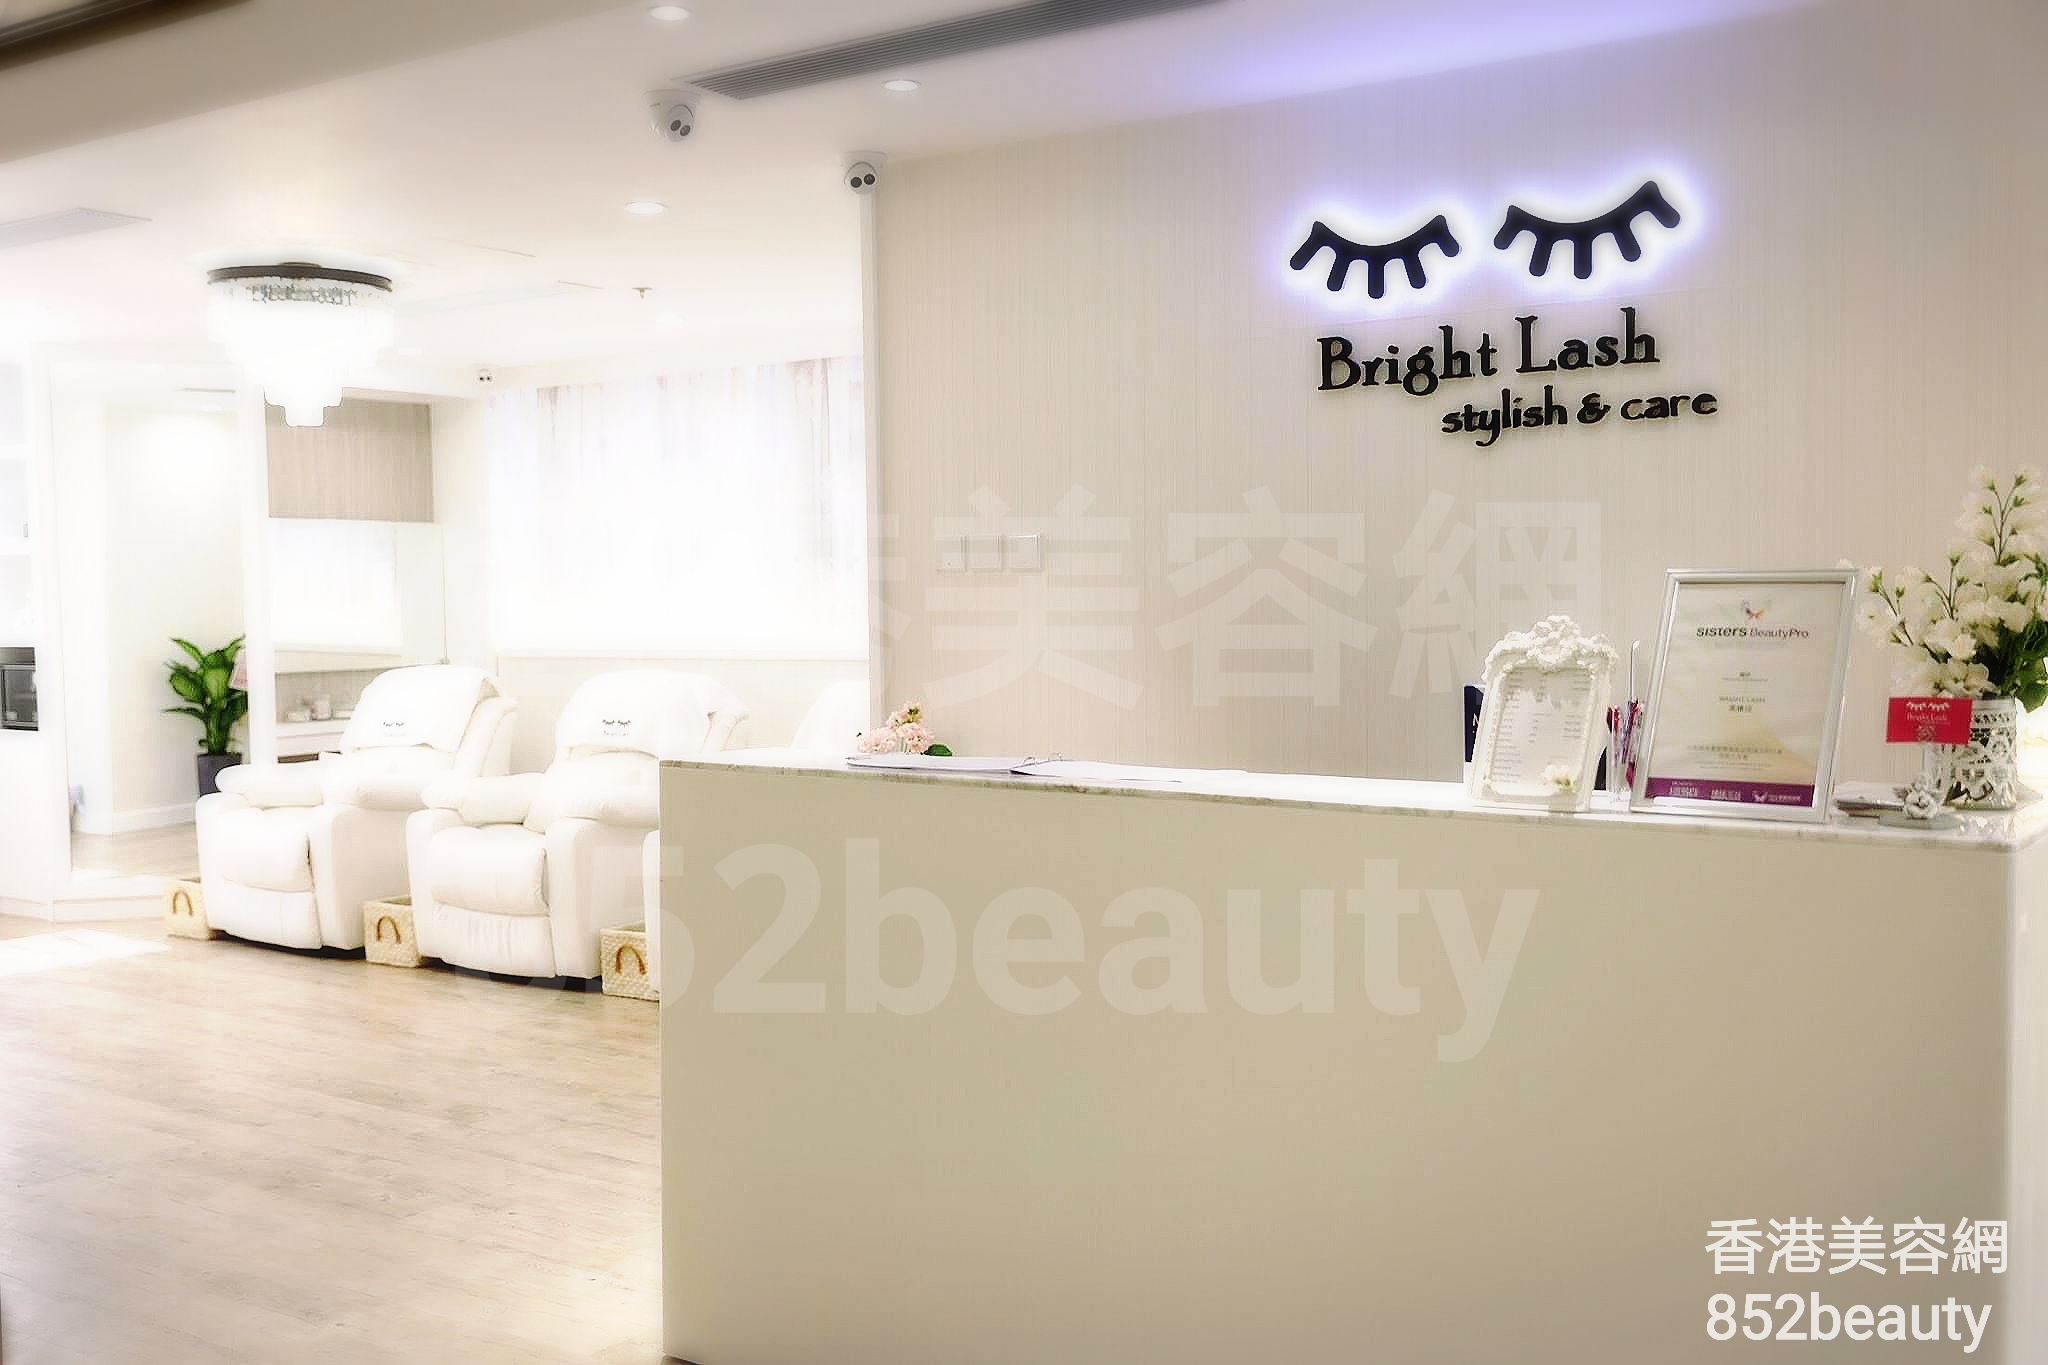 香港美容網 Hong Kong Beauty Salon 美容院 / 美容師: Bright Lash